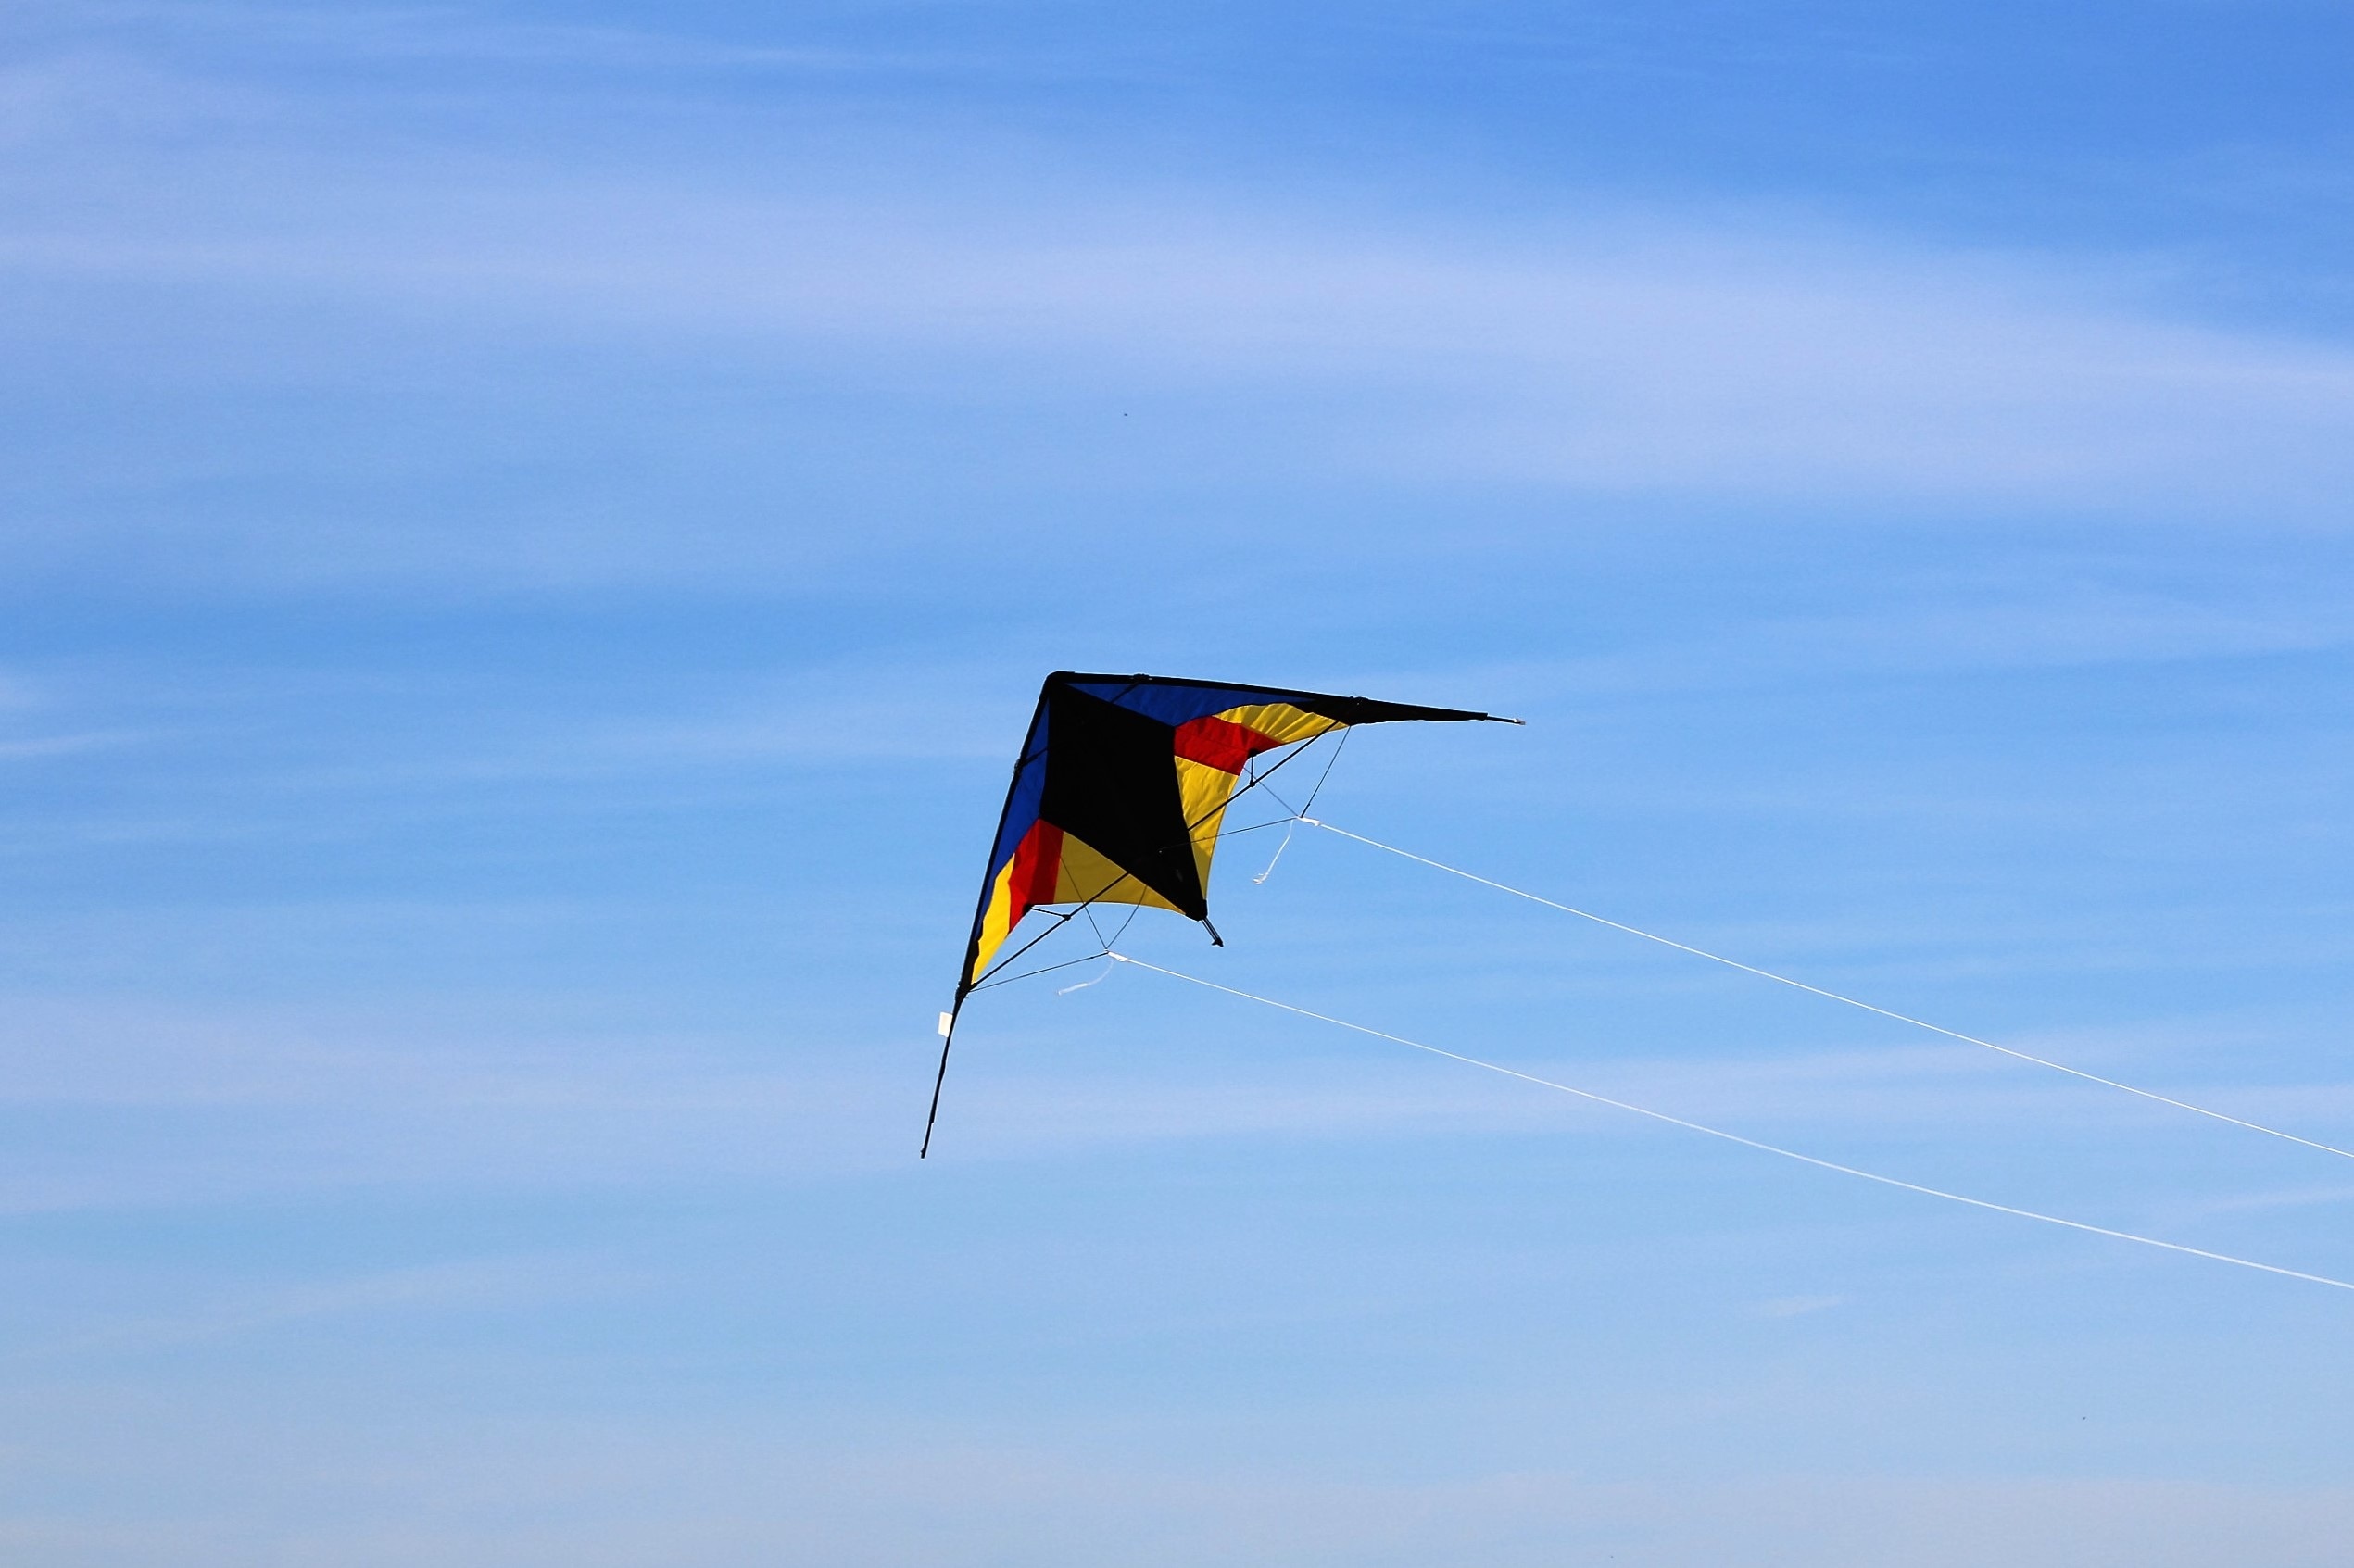 Kite Sports: Flying kite, Stable performance, Multi-line, Kite control. 2550x1700 HD Wallpaper.